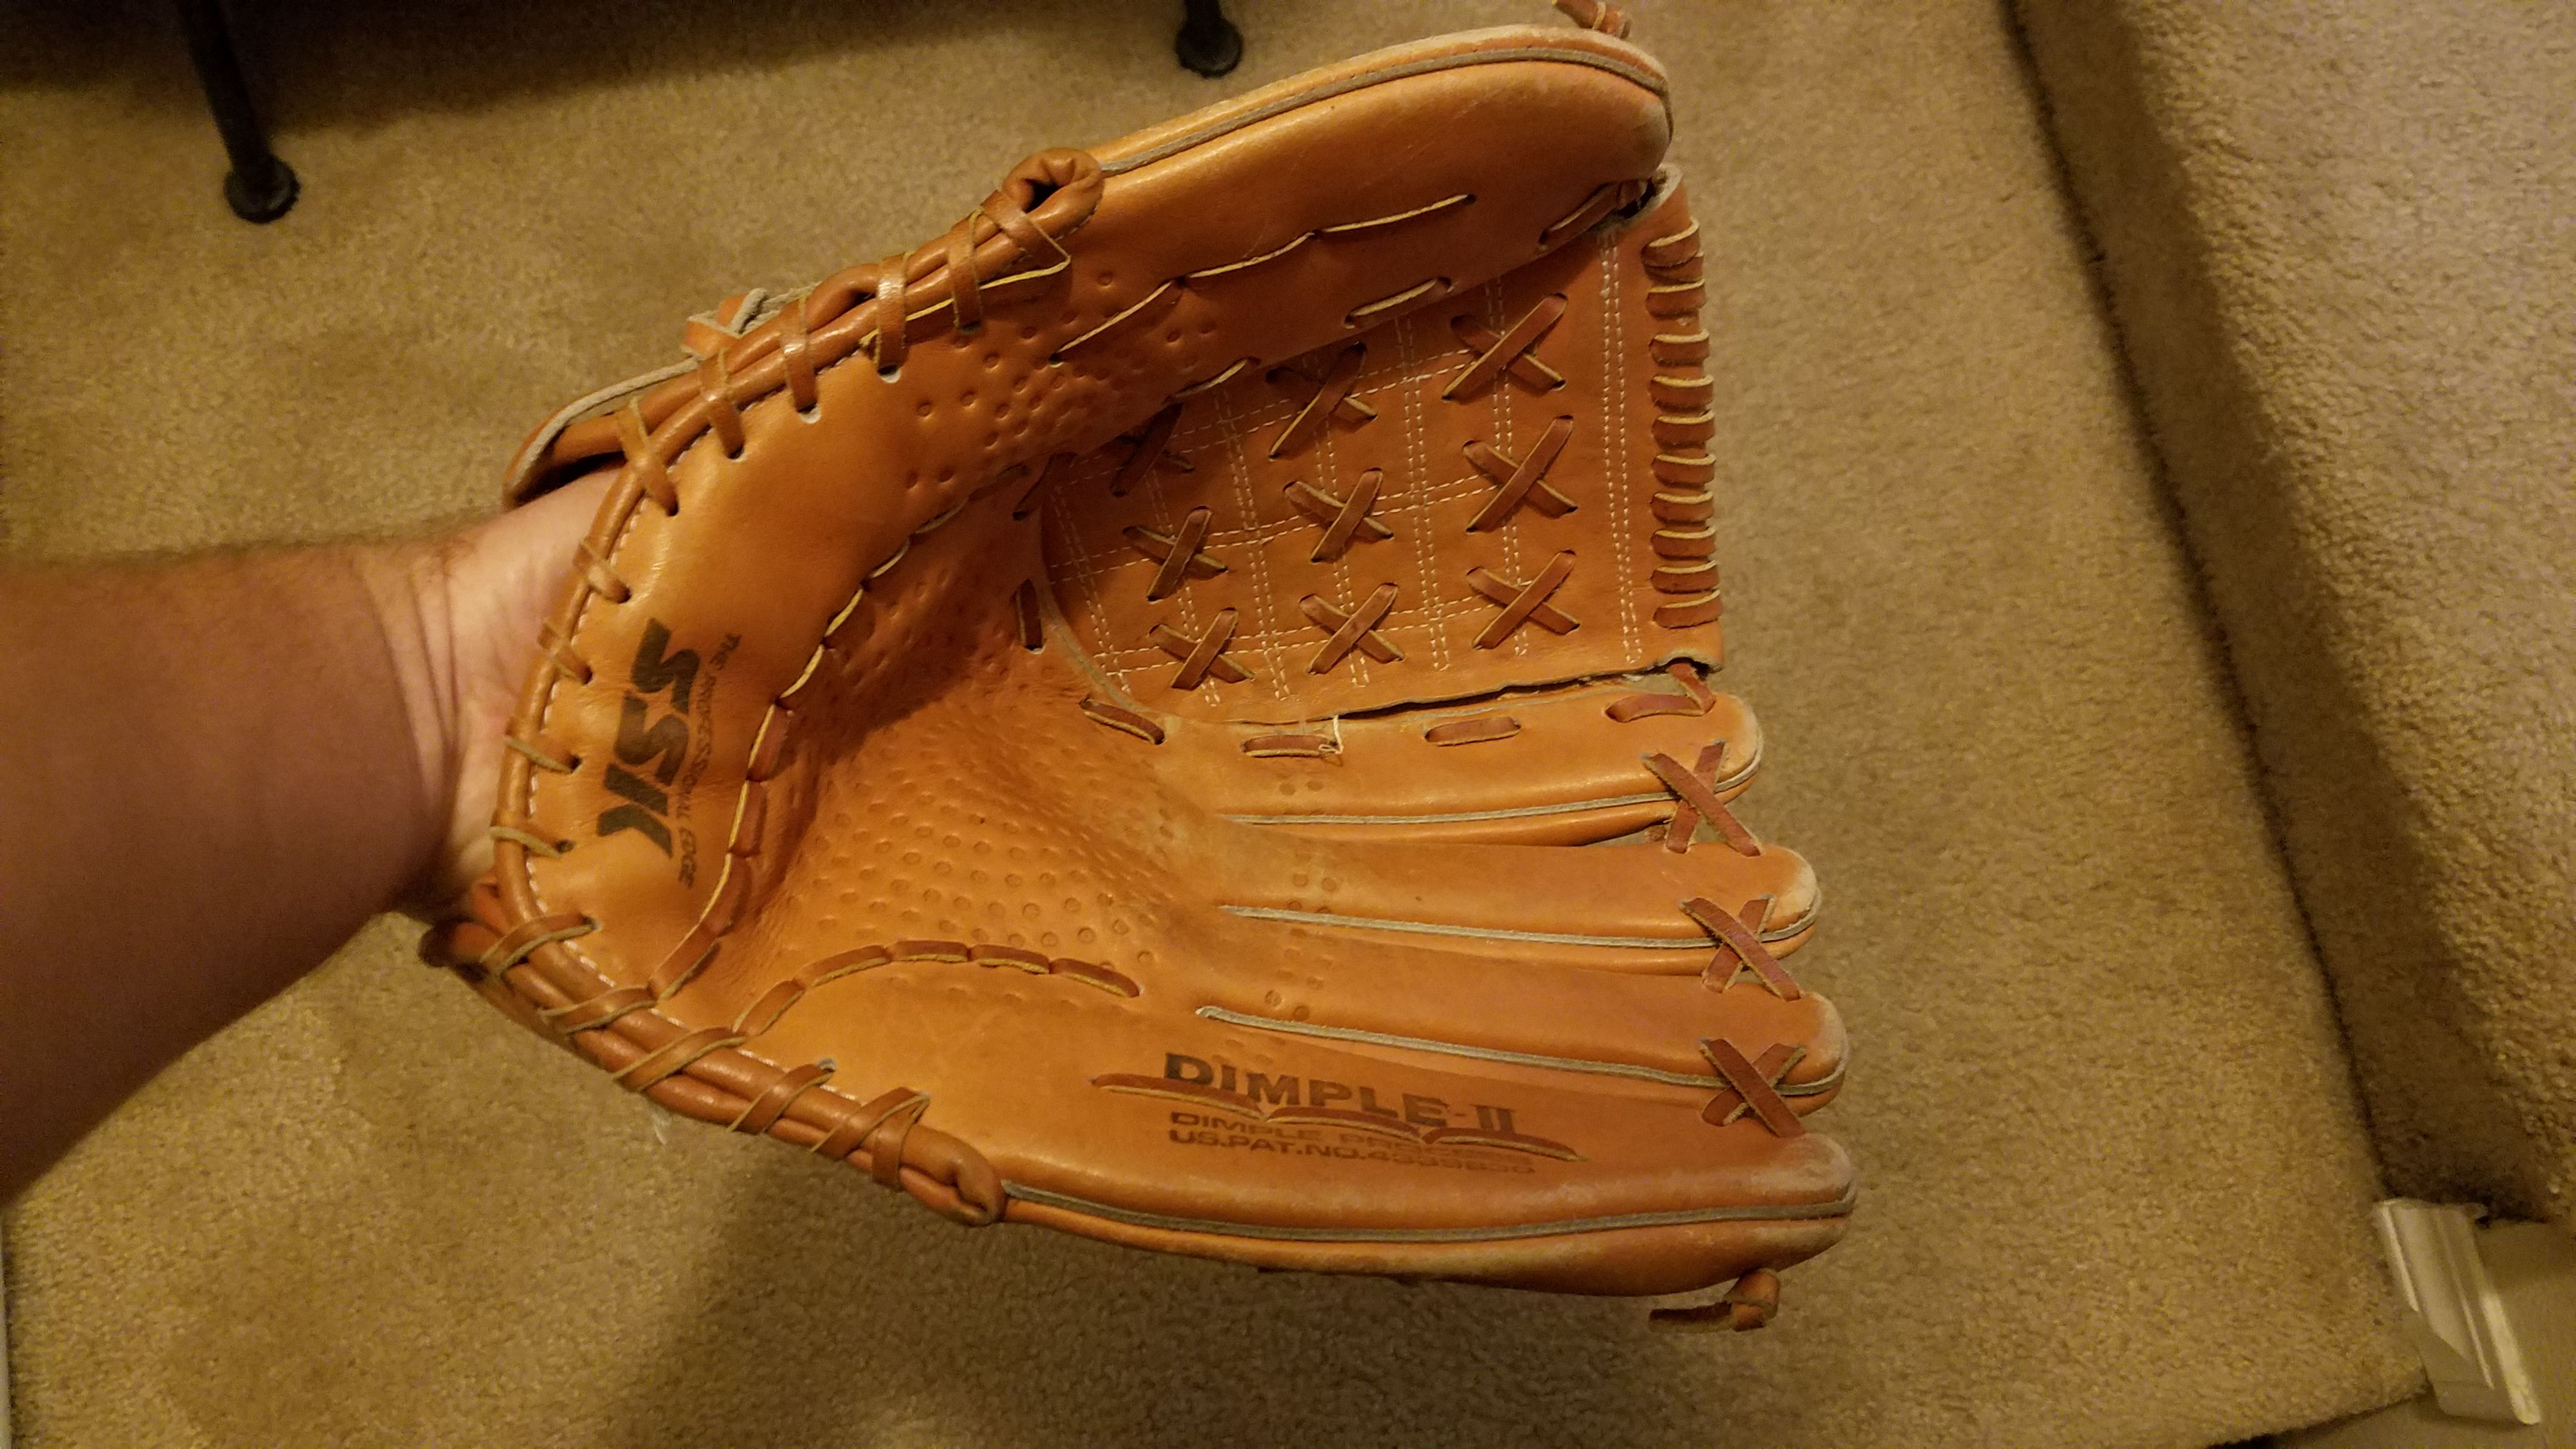 SSK Dimple II Outfield baseball/softball glove